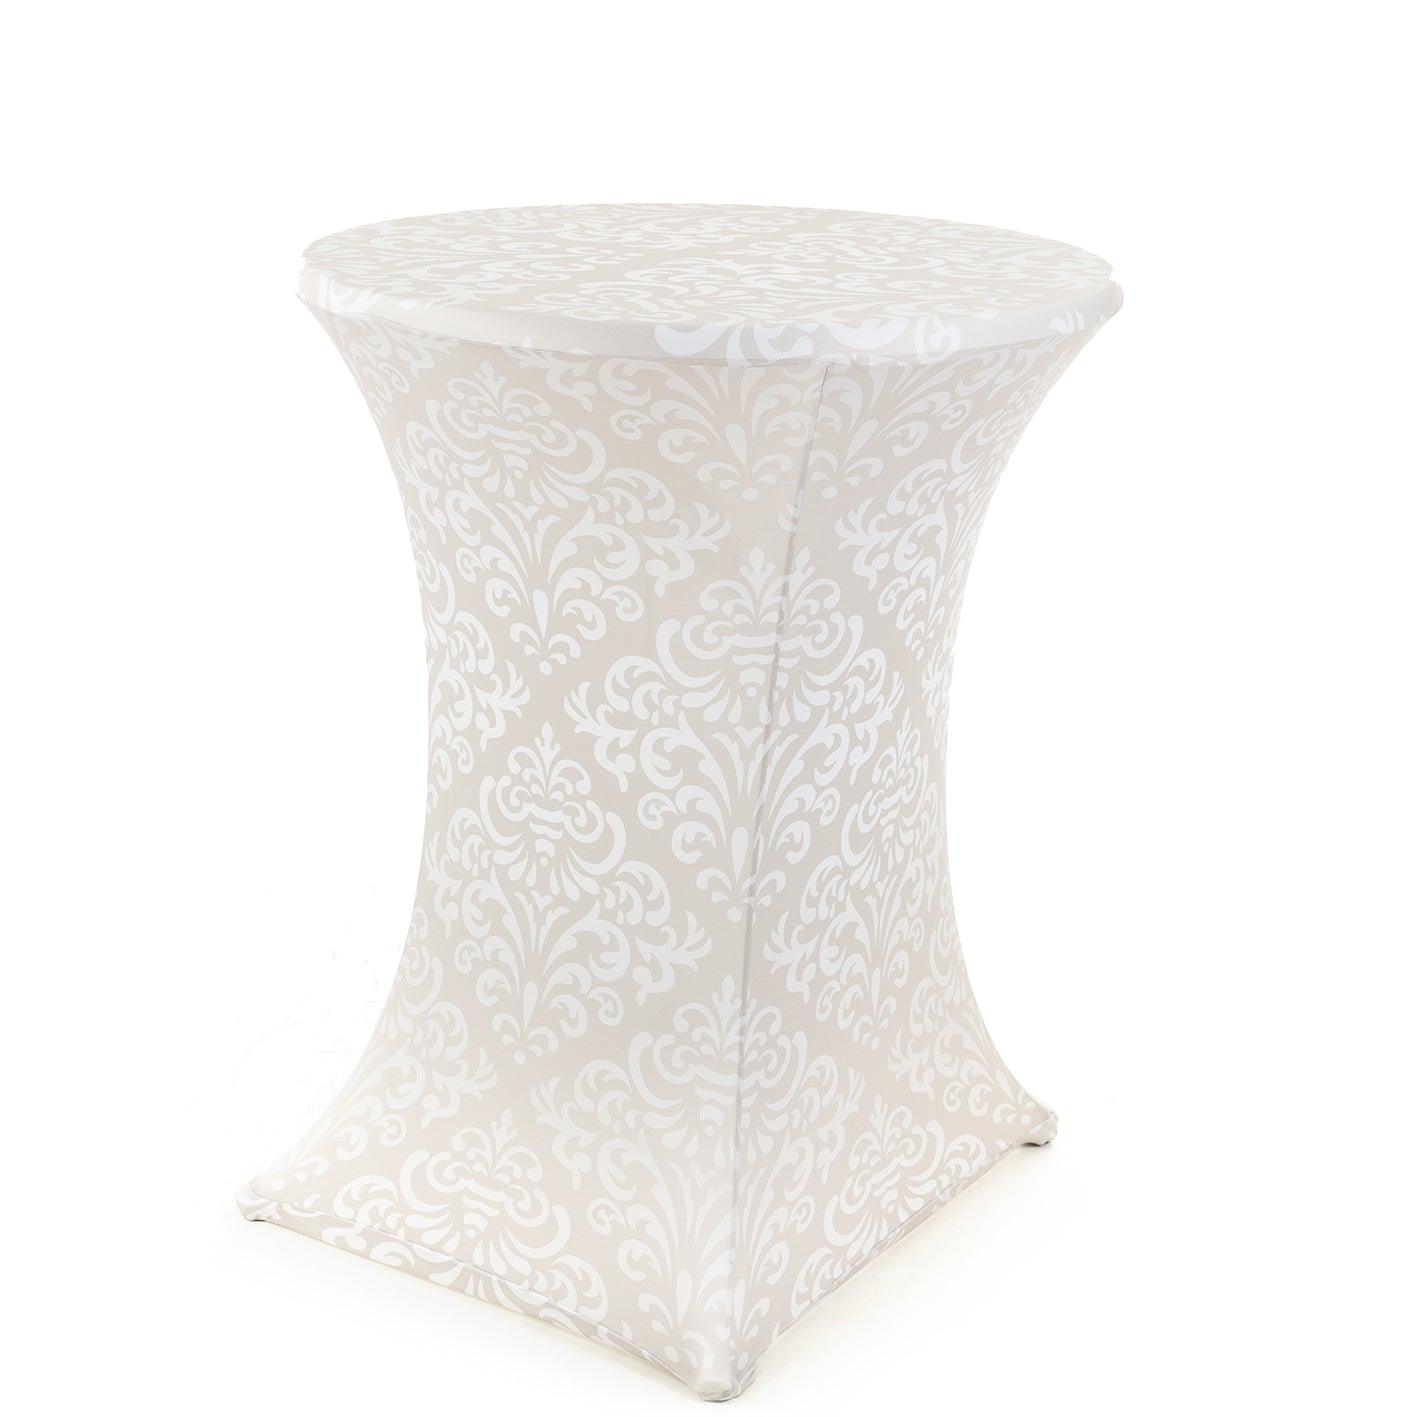 Standing Table Cover: Damast White & Cream - Di-Jet nv - The Designer? YOU! 